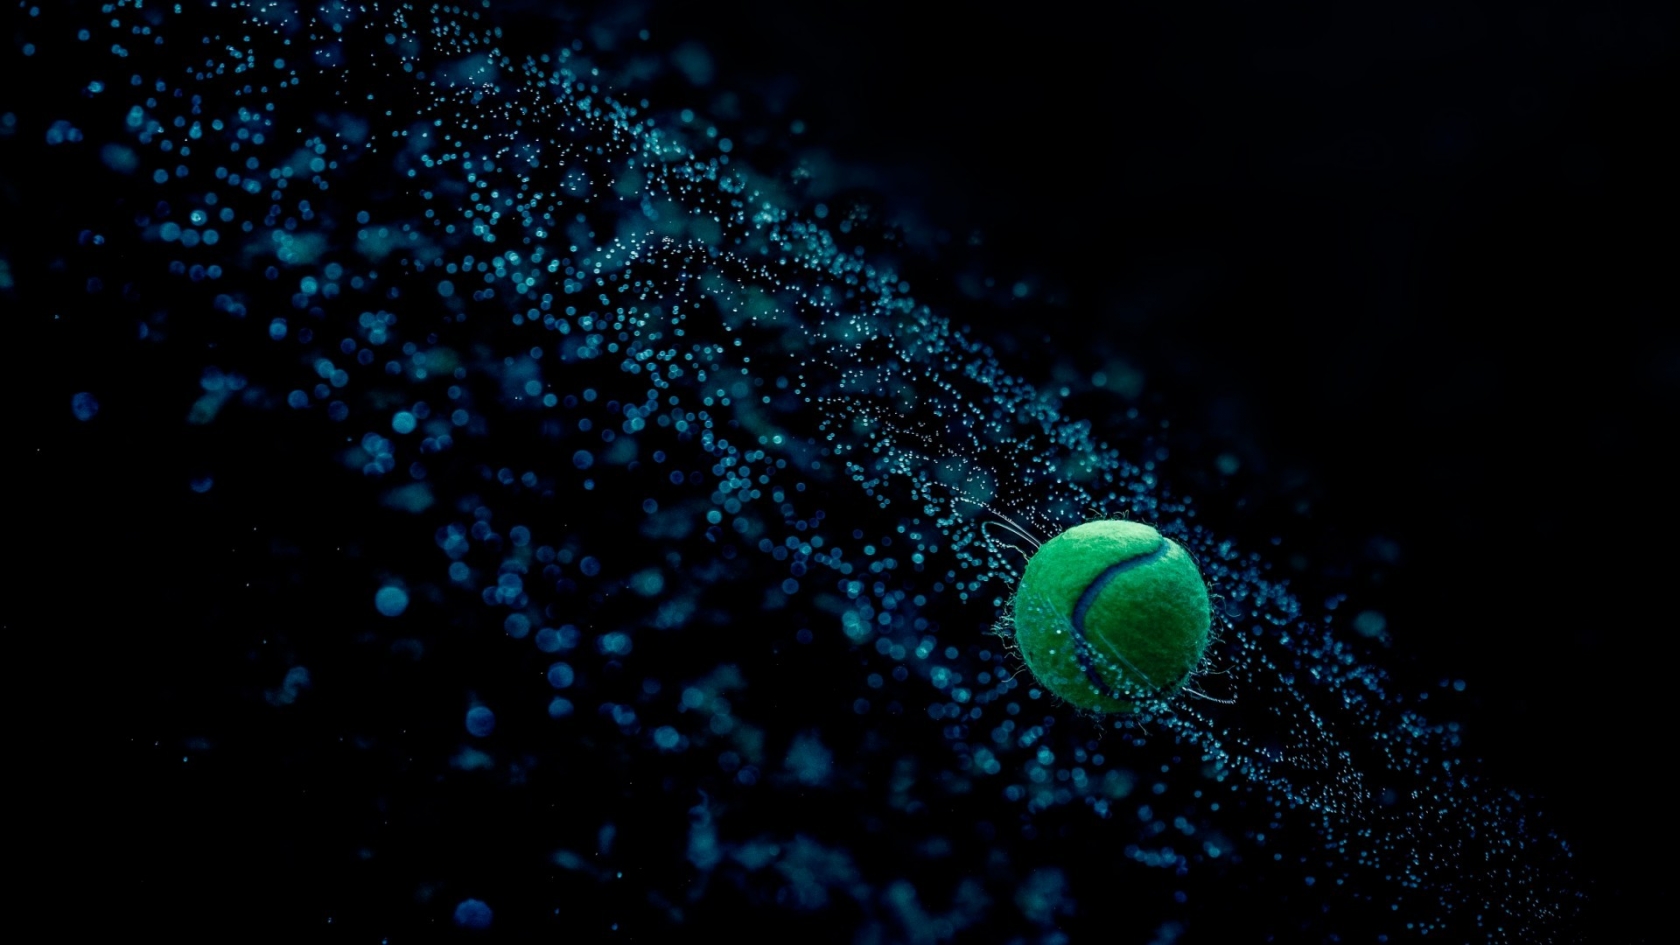 Fantasy Tennis Ball for 1680 x 945 HDTV resolution